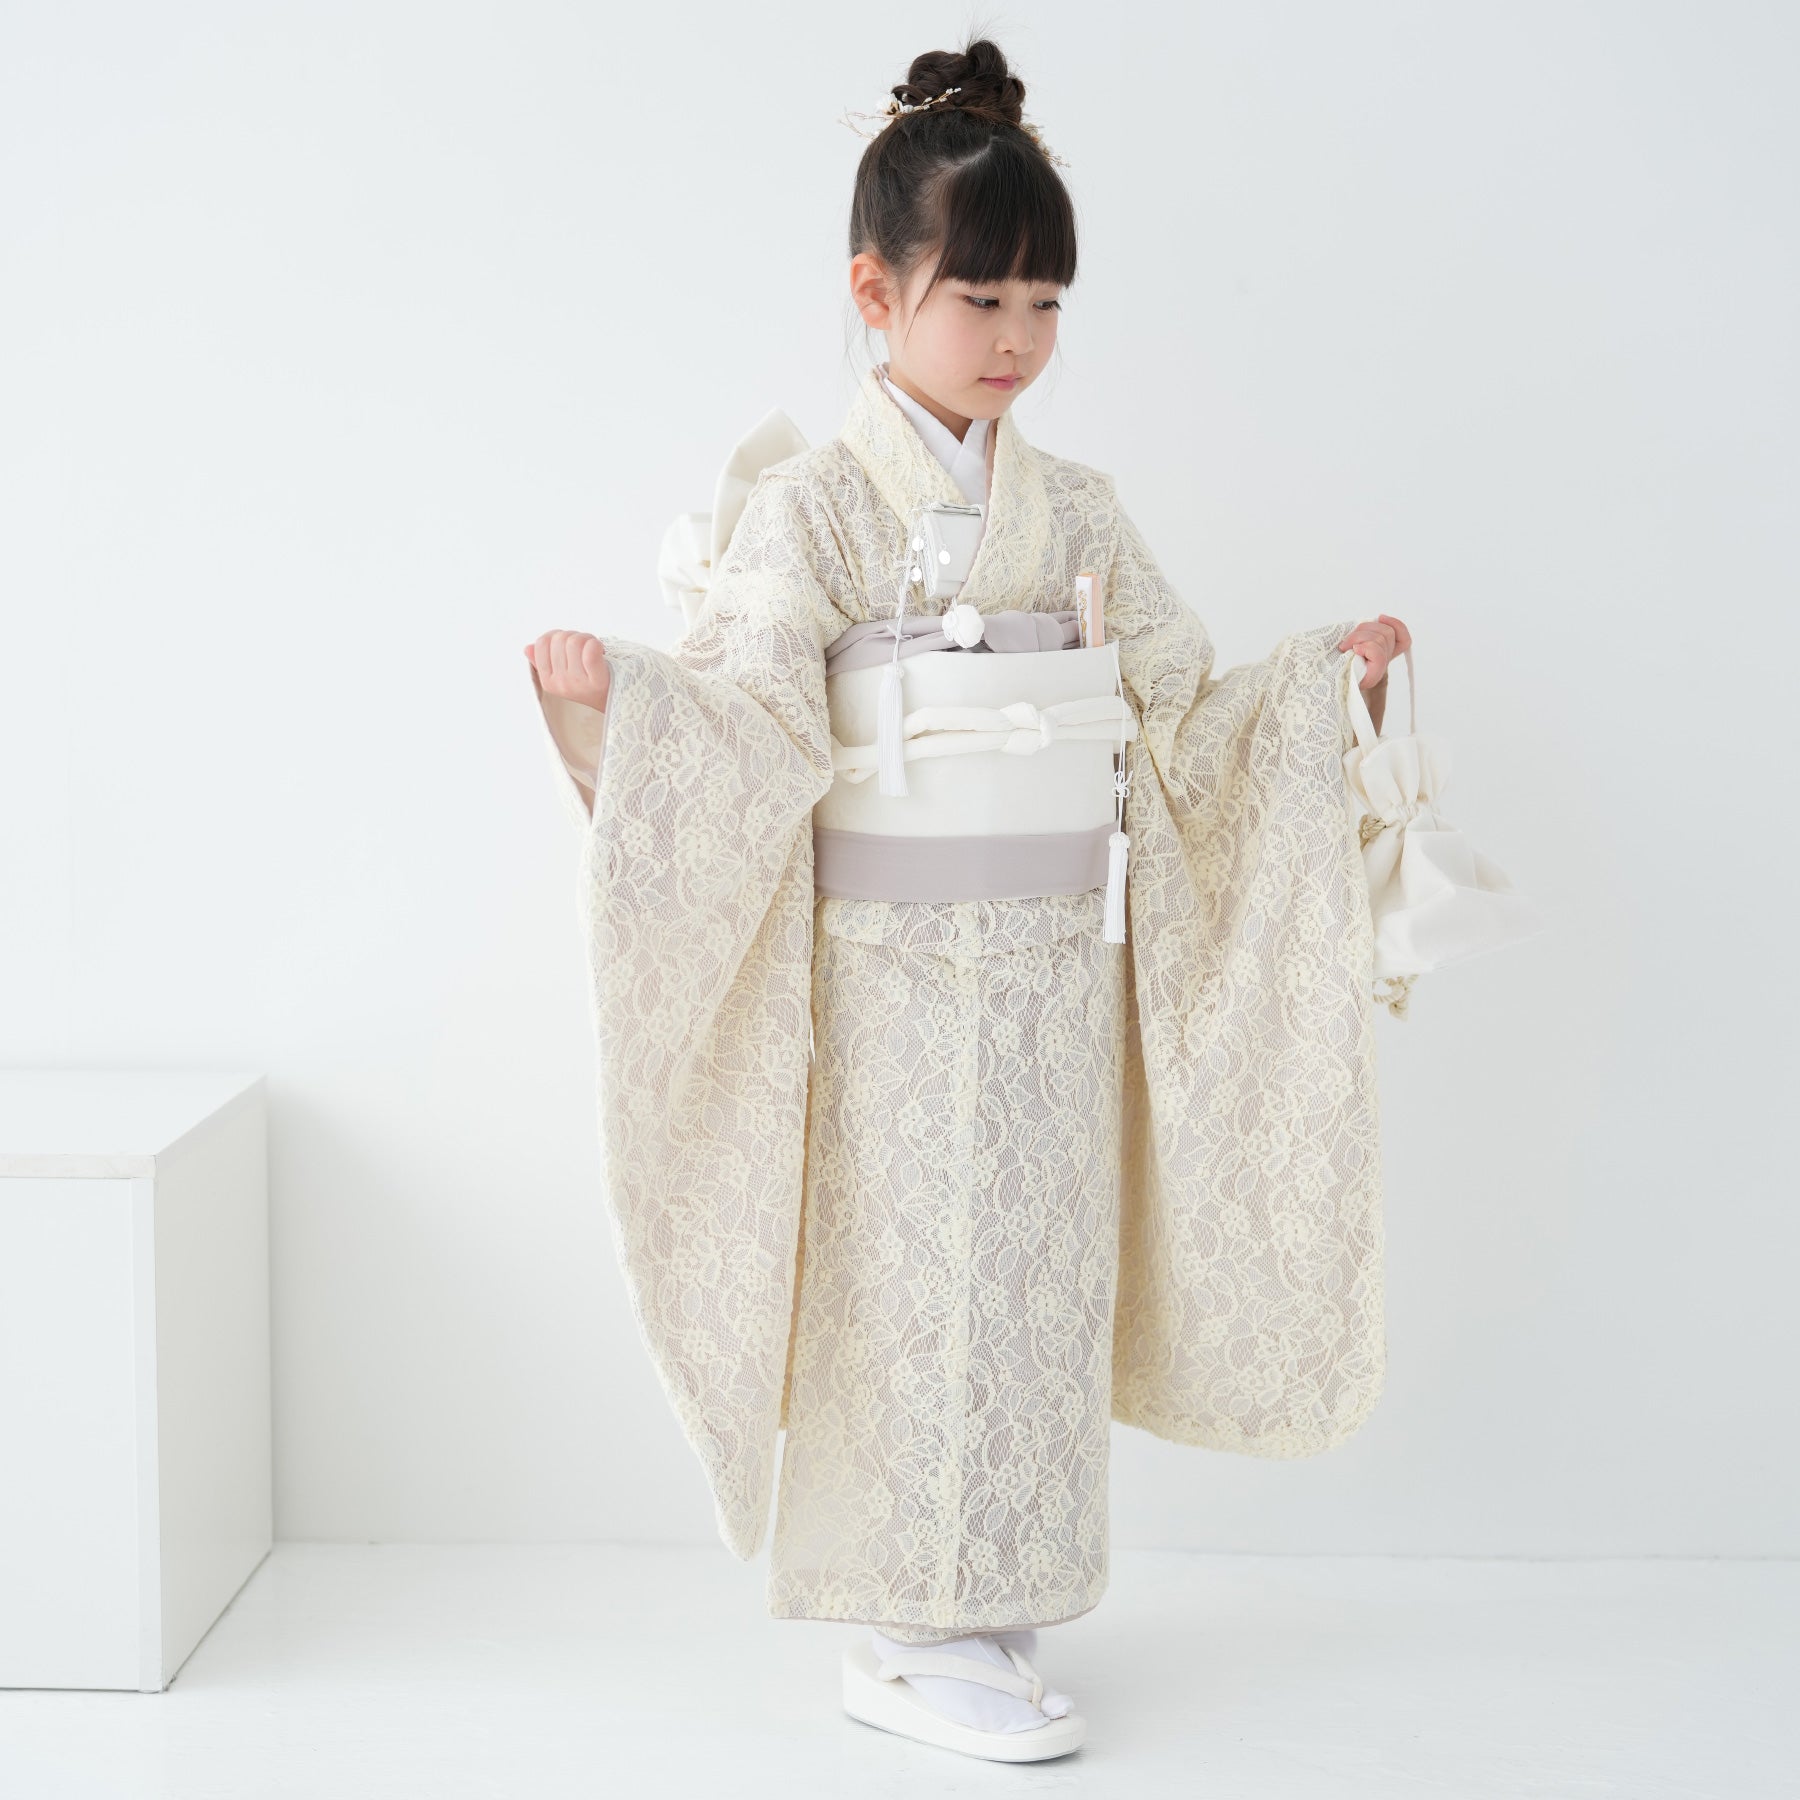 松田聖子 SEIKO MATSUDA 着物 3歳 七五三 セット - 和服